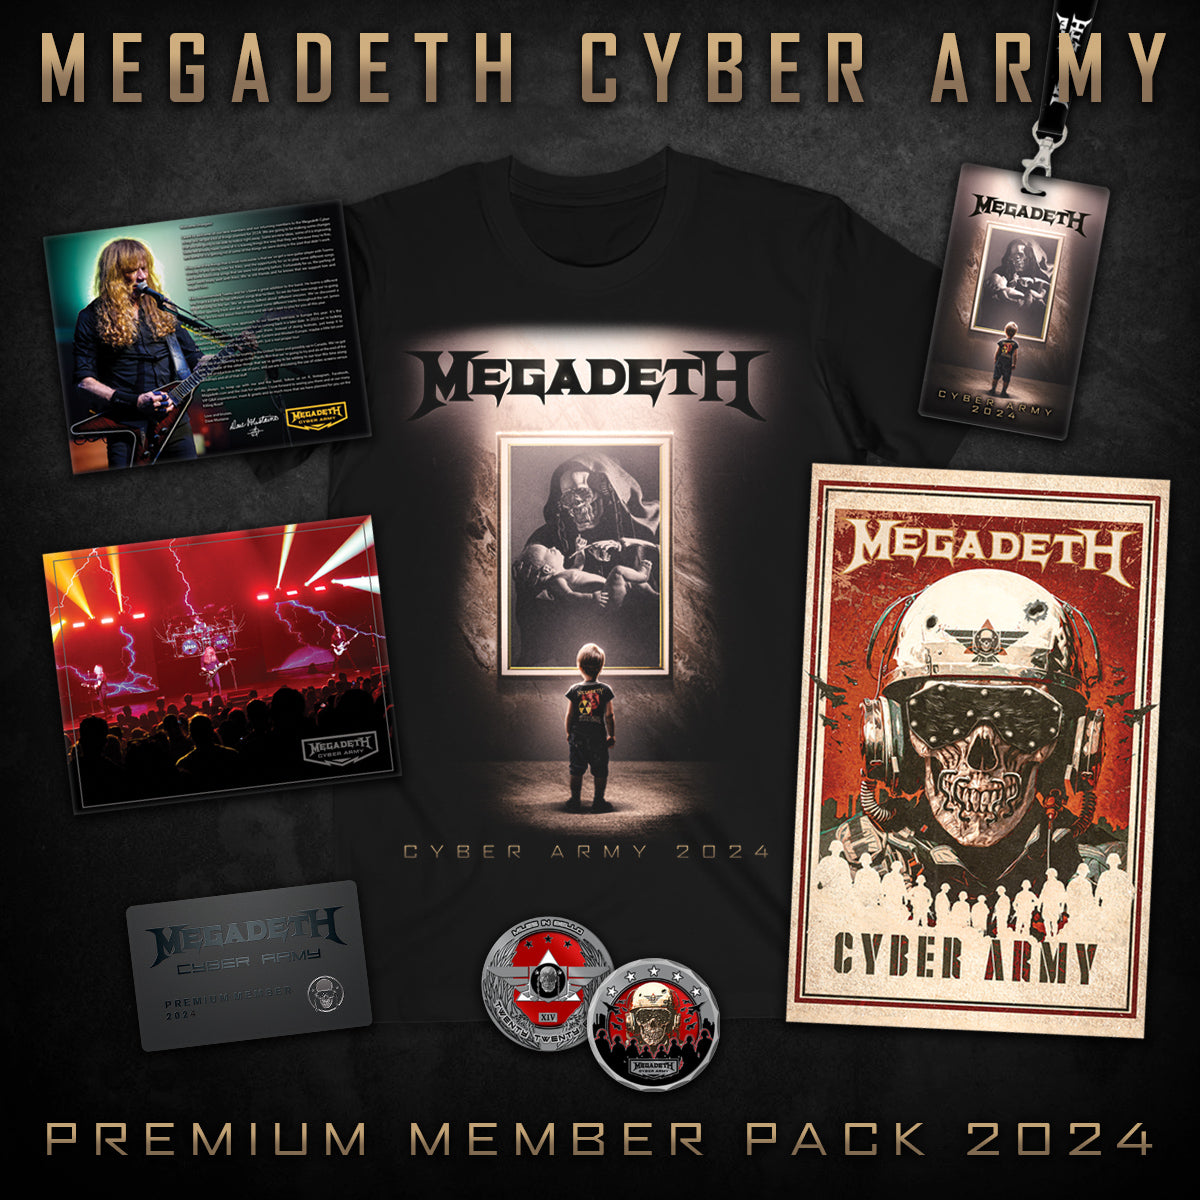 Cyber Army 2024 Premium Membership